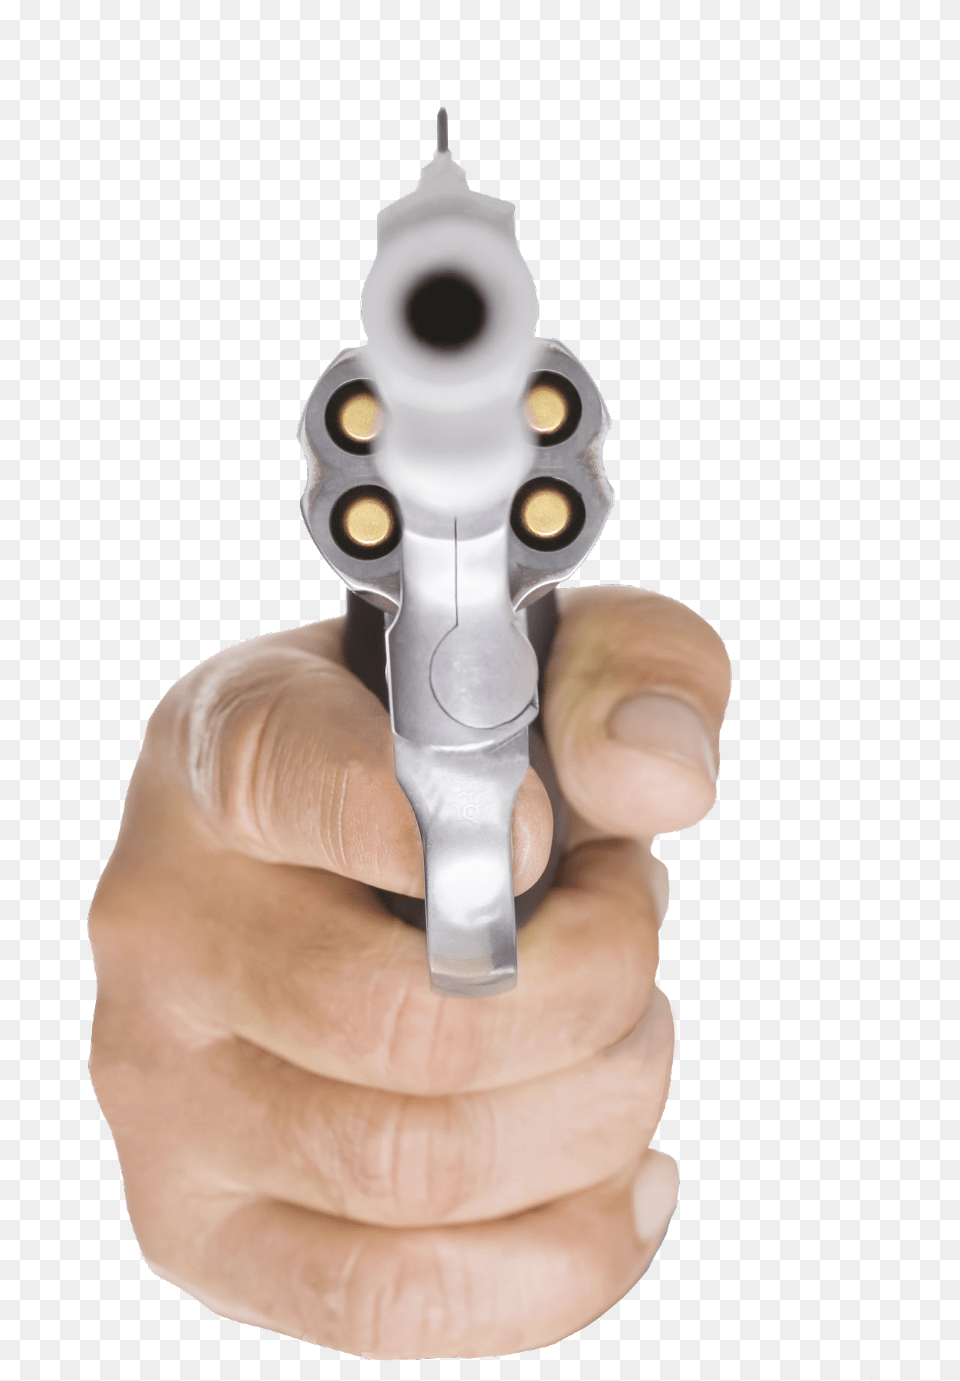 Pistol Gun Guns Bullet Weapon Face Cannon Revolver Hand With Gun Transparent, Firearm, Handgun, Smoke Pipe, Body Part Free Png Download